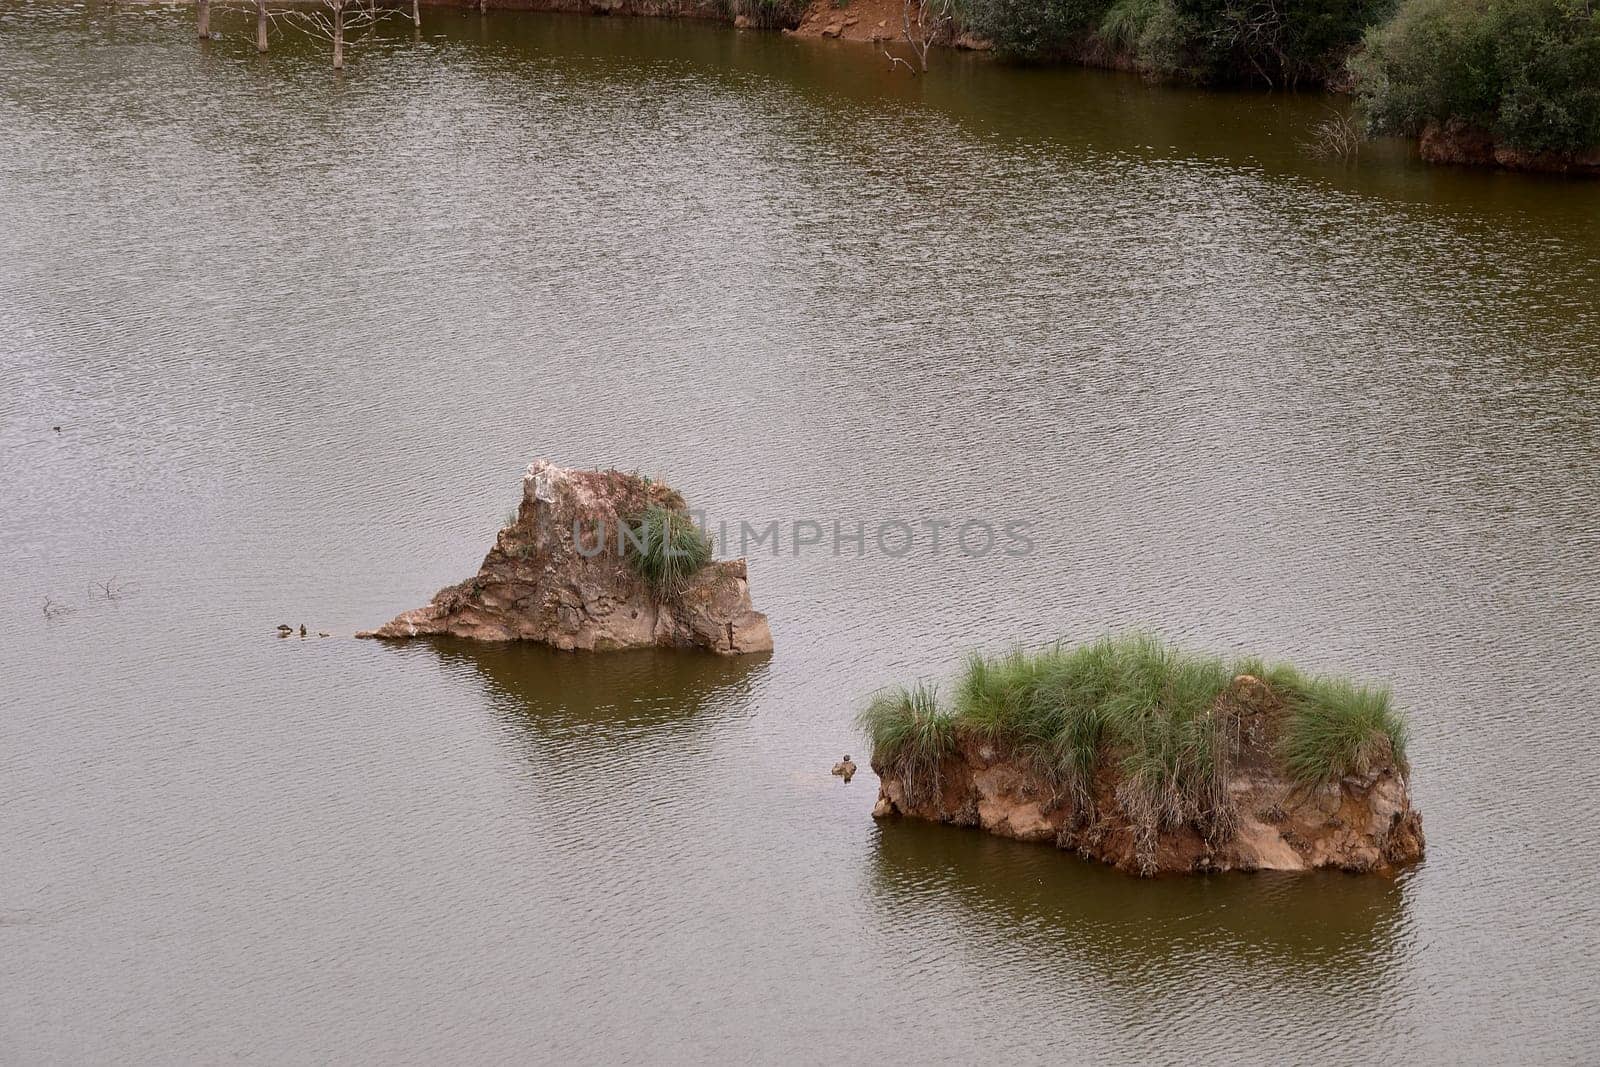 Two large rocks emerging in a lake by raul_ruiz